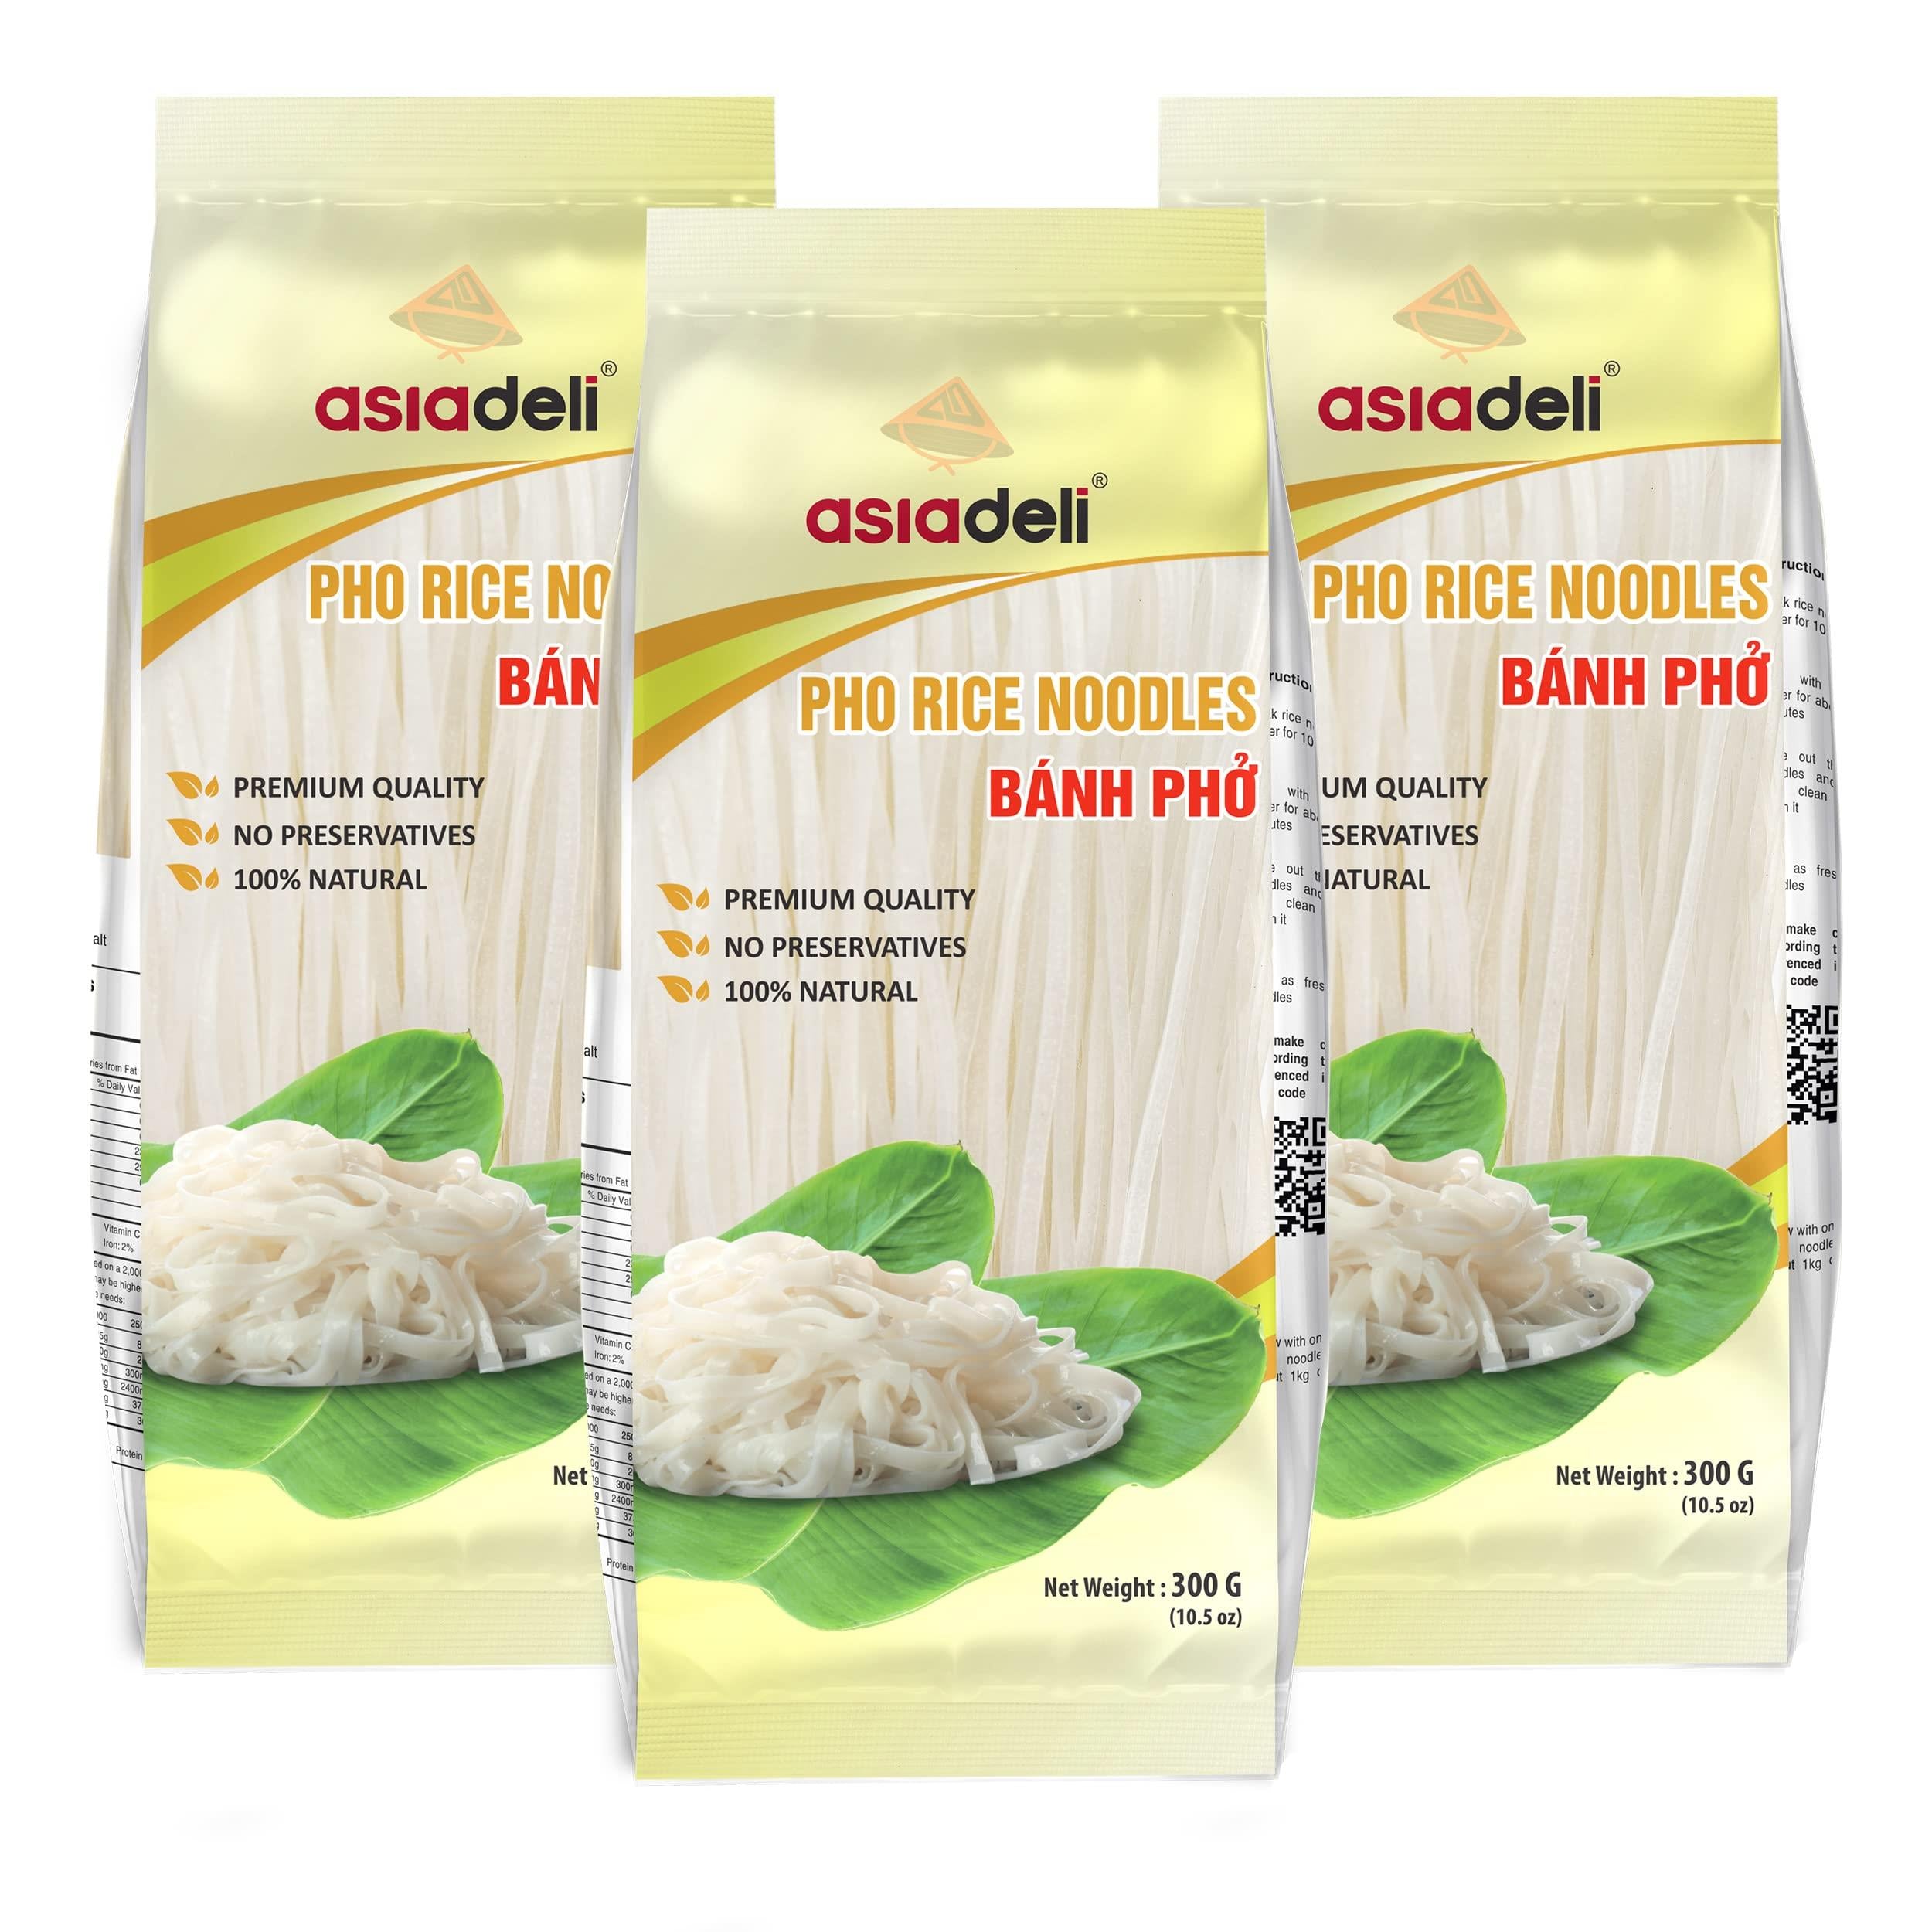 Asiadeli Pho Rice Noodles, Premium Rice Stick Noodles, Banh Pho Noodles - 10.5 oz. (Pack of 3 Bags)